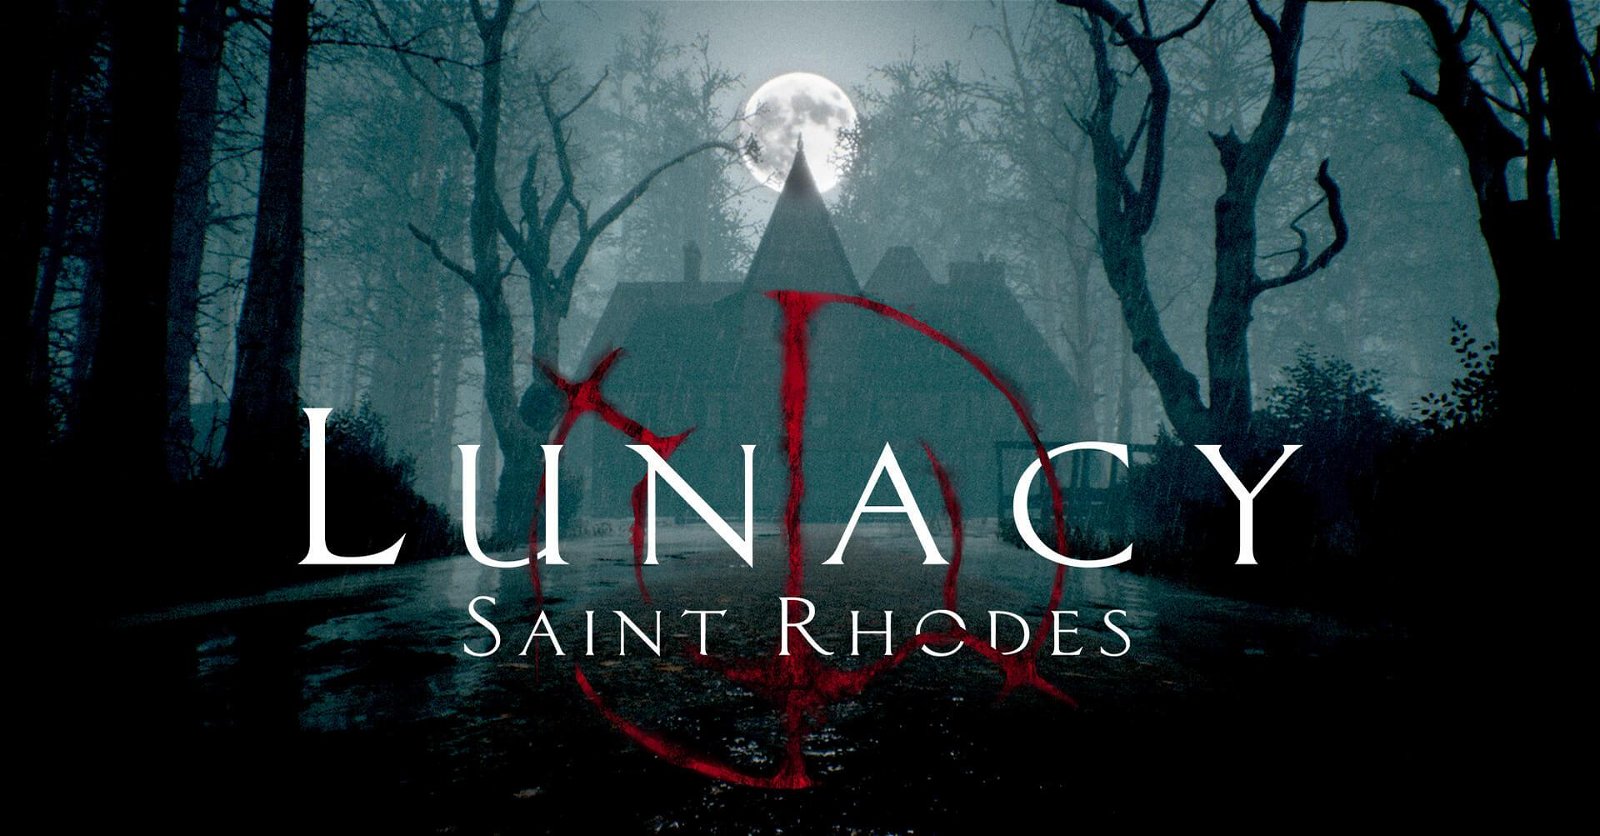 Lunacy Saint Rhodes torna a mostrarsi con un nuovo video gameplay